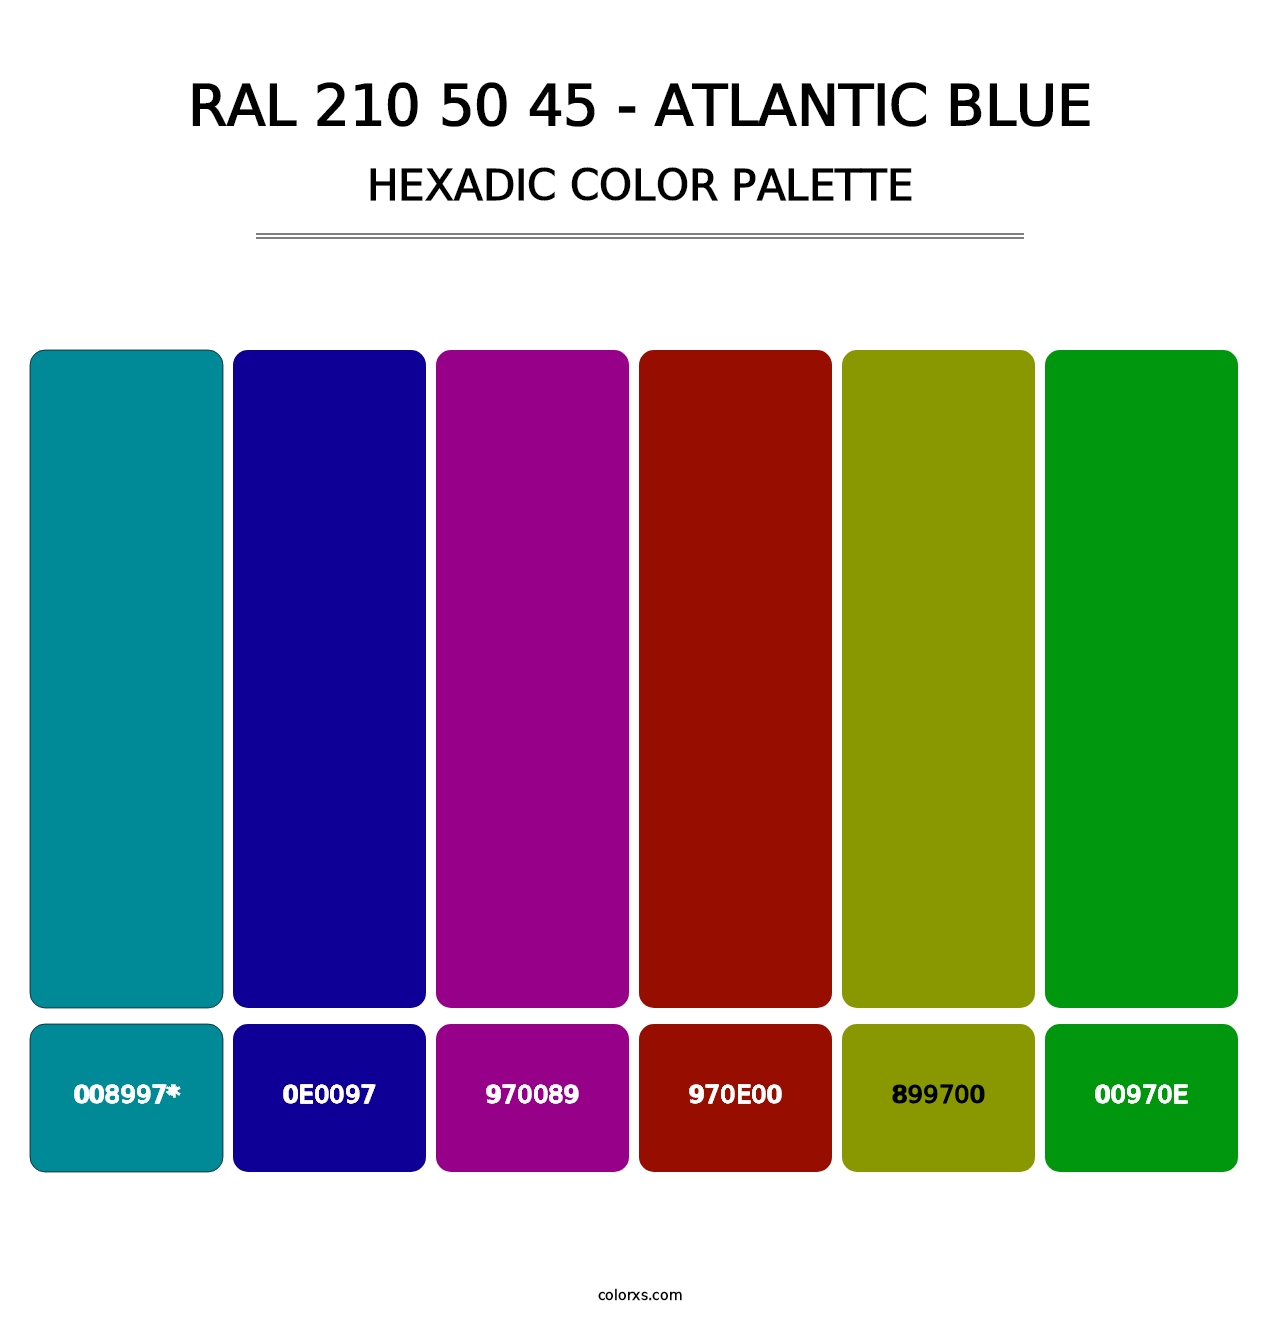 RAL 210 50 45 - Atlantic Blue - Hexadic Color Palette